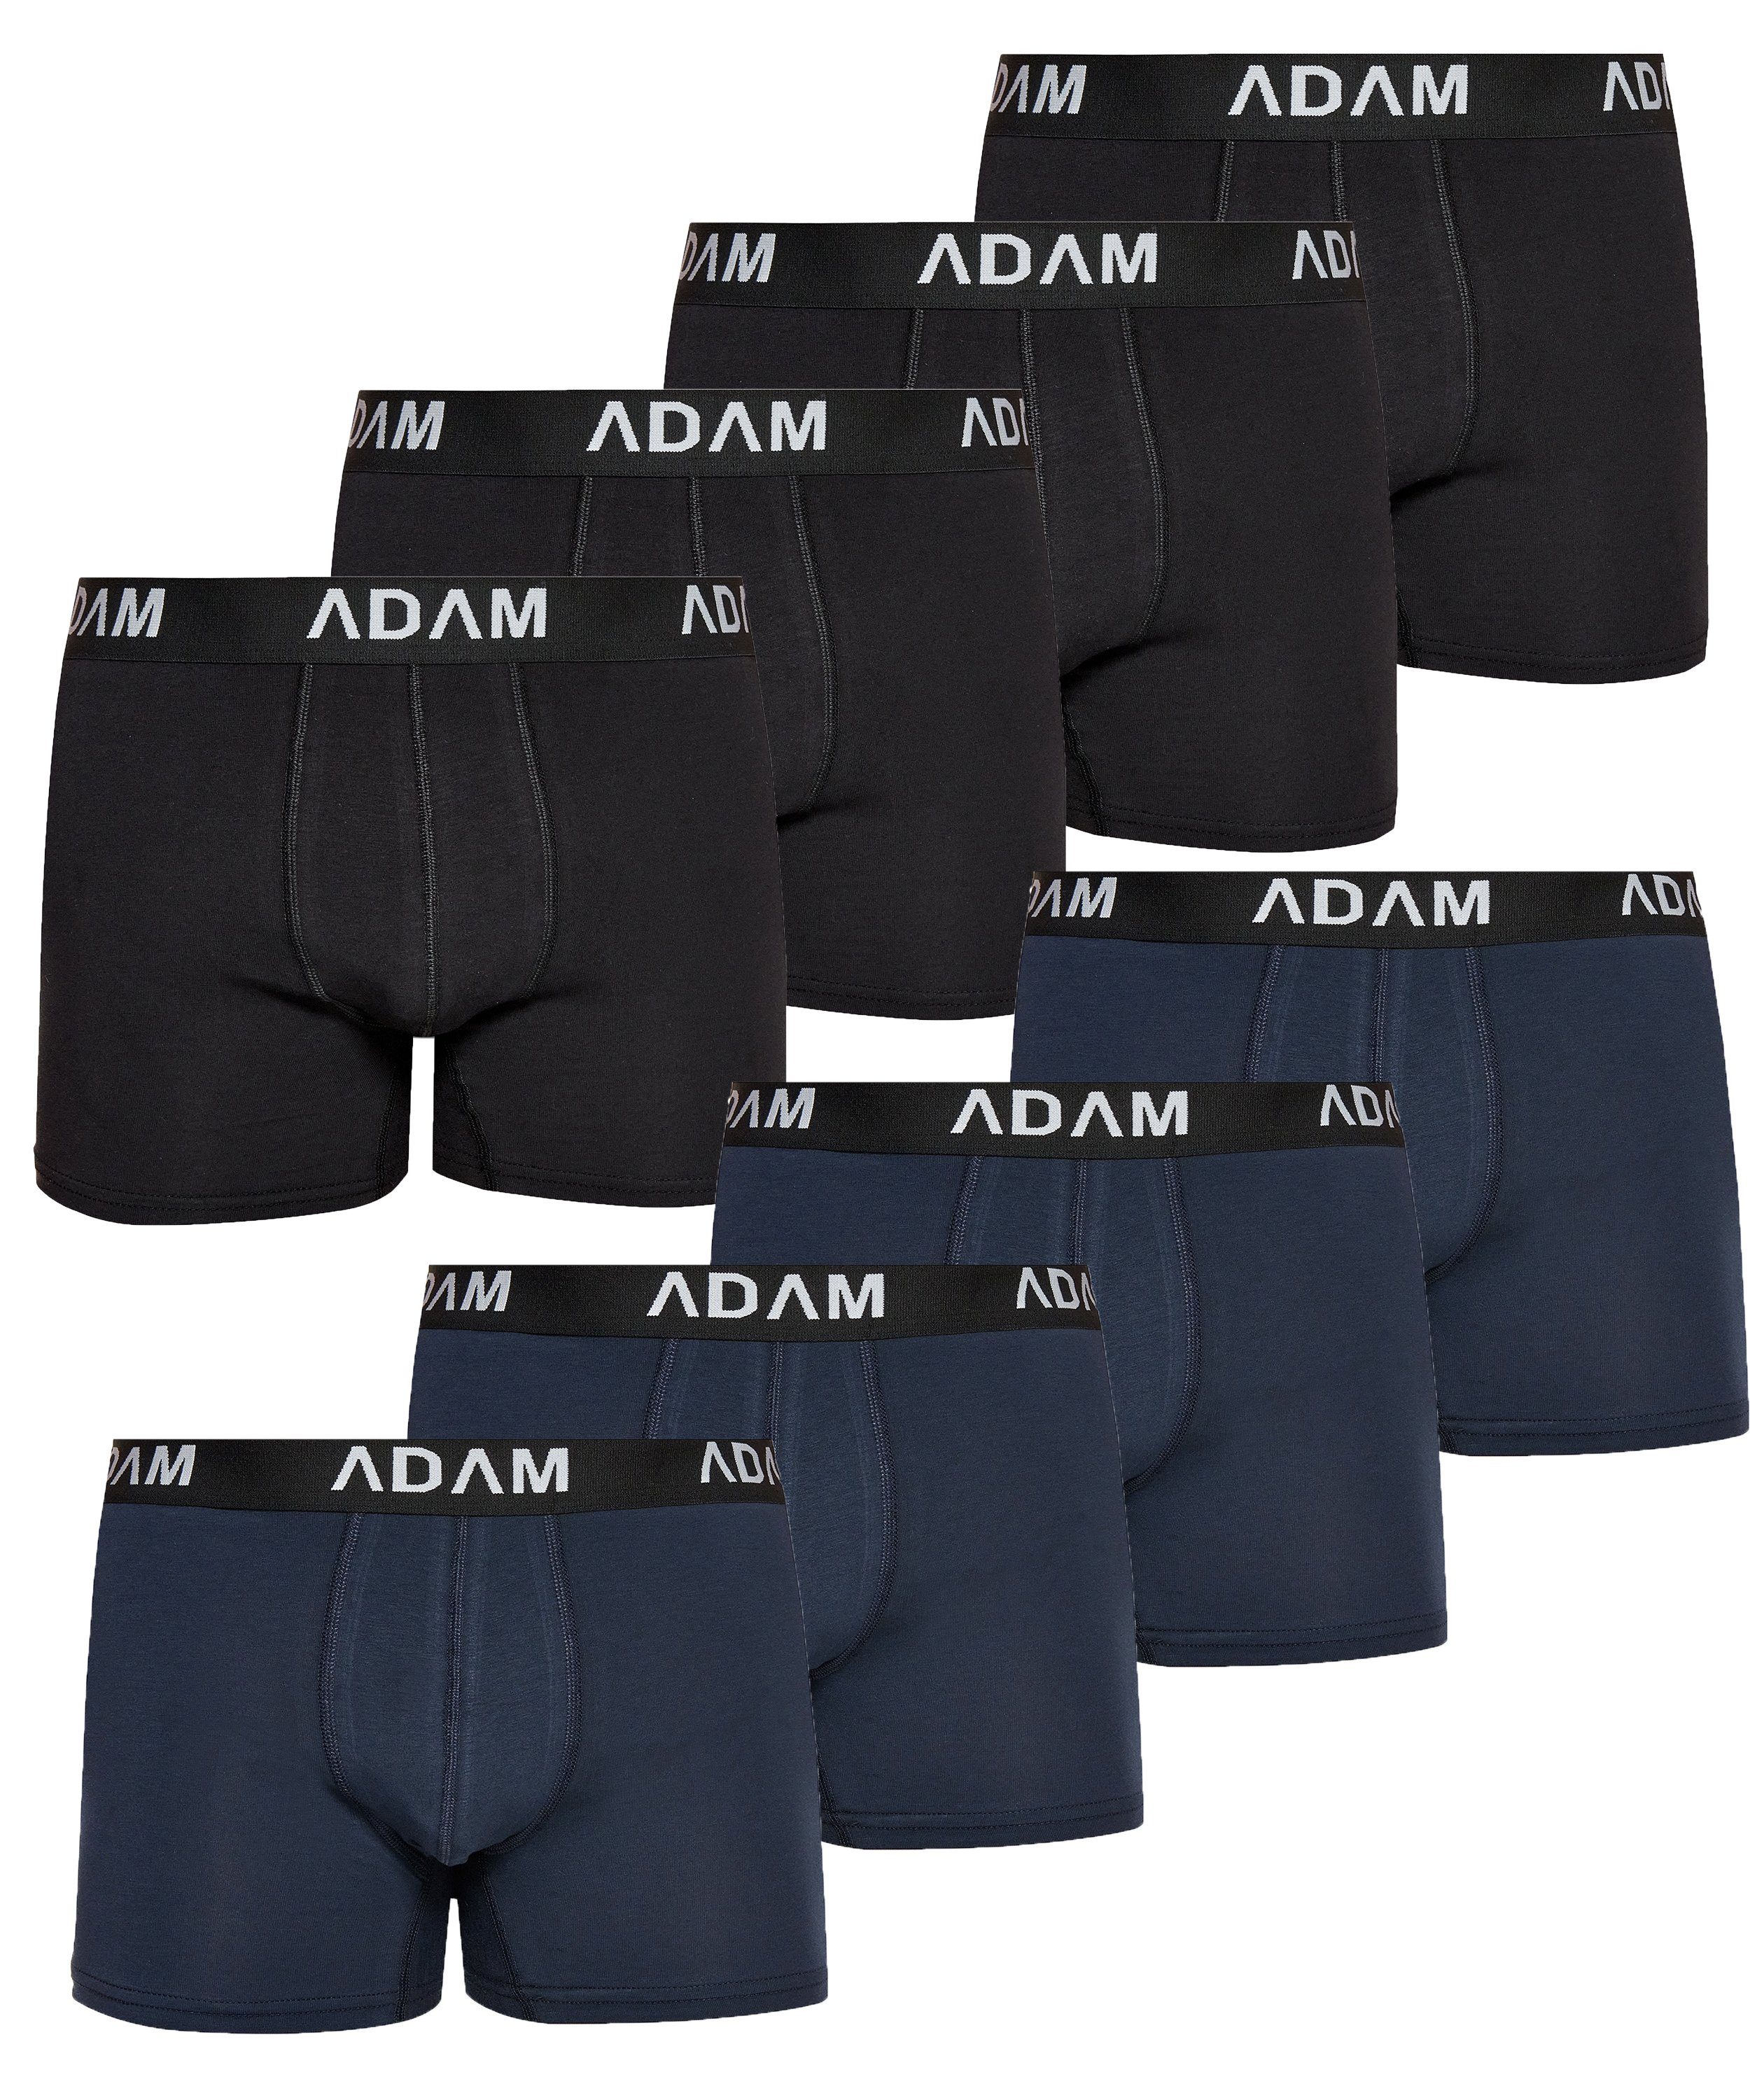 ADAM JEANS Boxershorts Boxer-1 (8-St., 6er Set, 8er Set, 10er Set, 12er Set) Boxershorts Herren Boxer Shorts Männer Unterhosen Trunks Underwear 8er Set Box-D